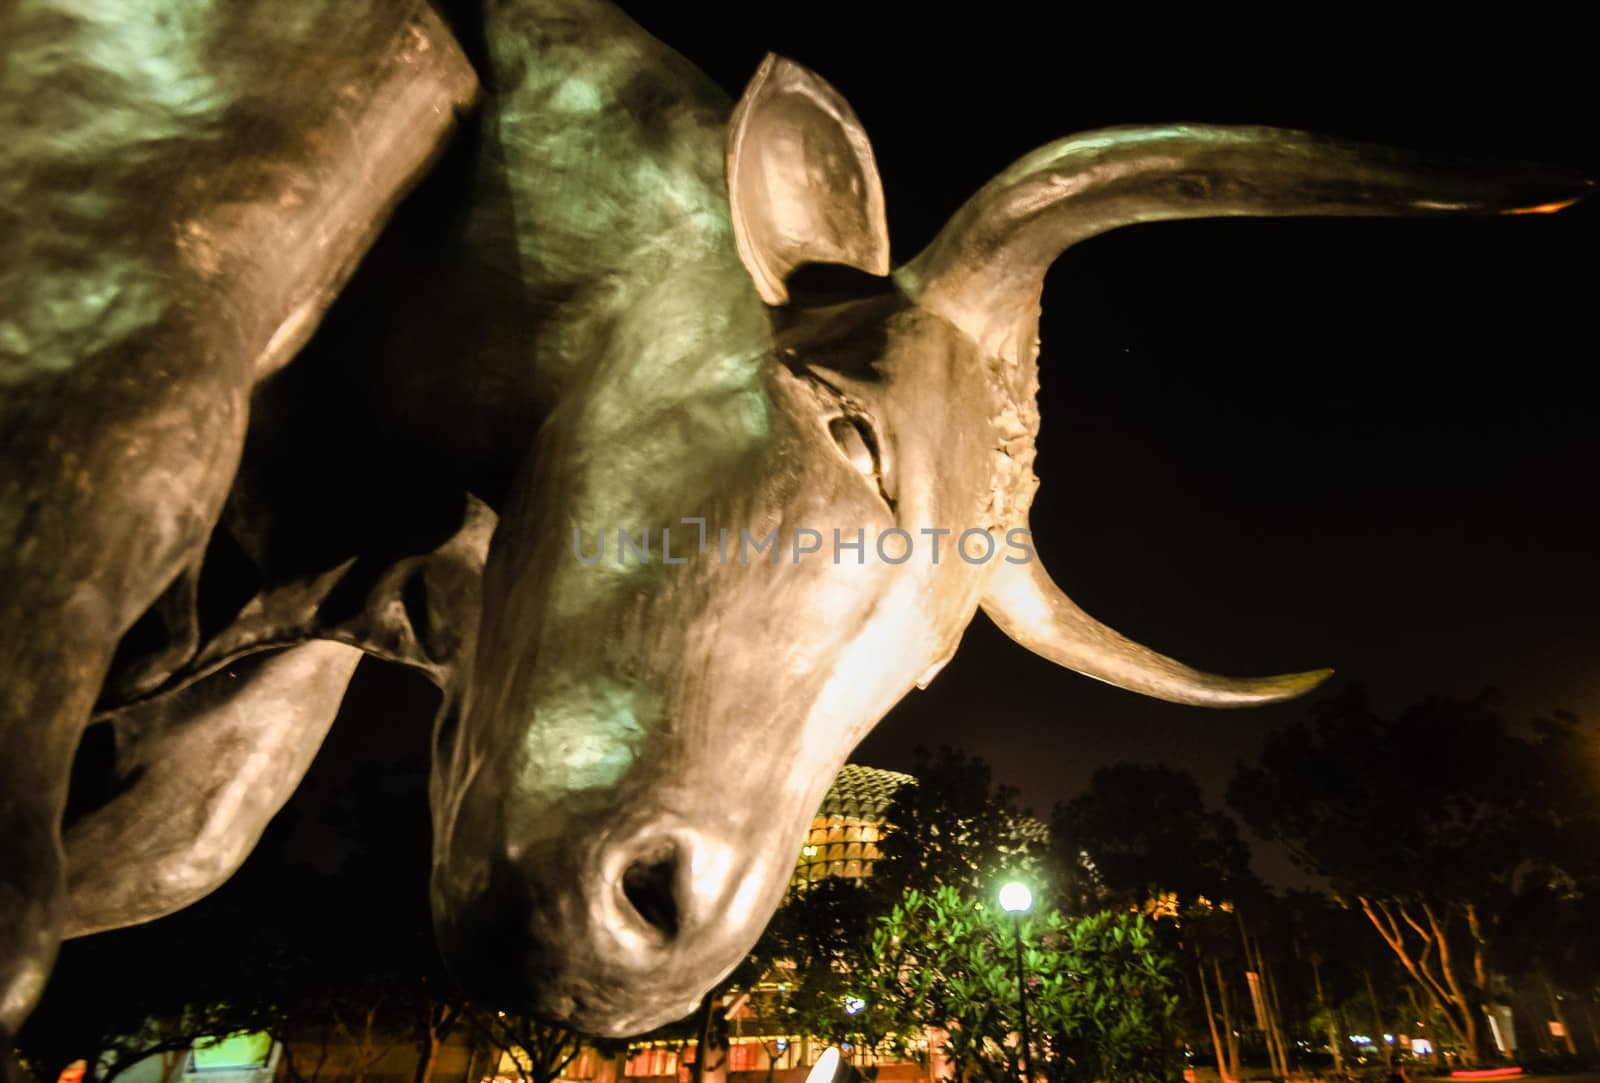 Singapore stock exchange bull at night by weltreisendertj